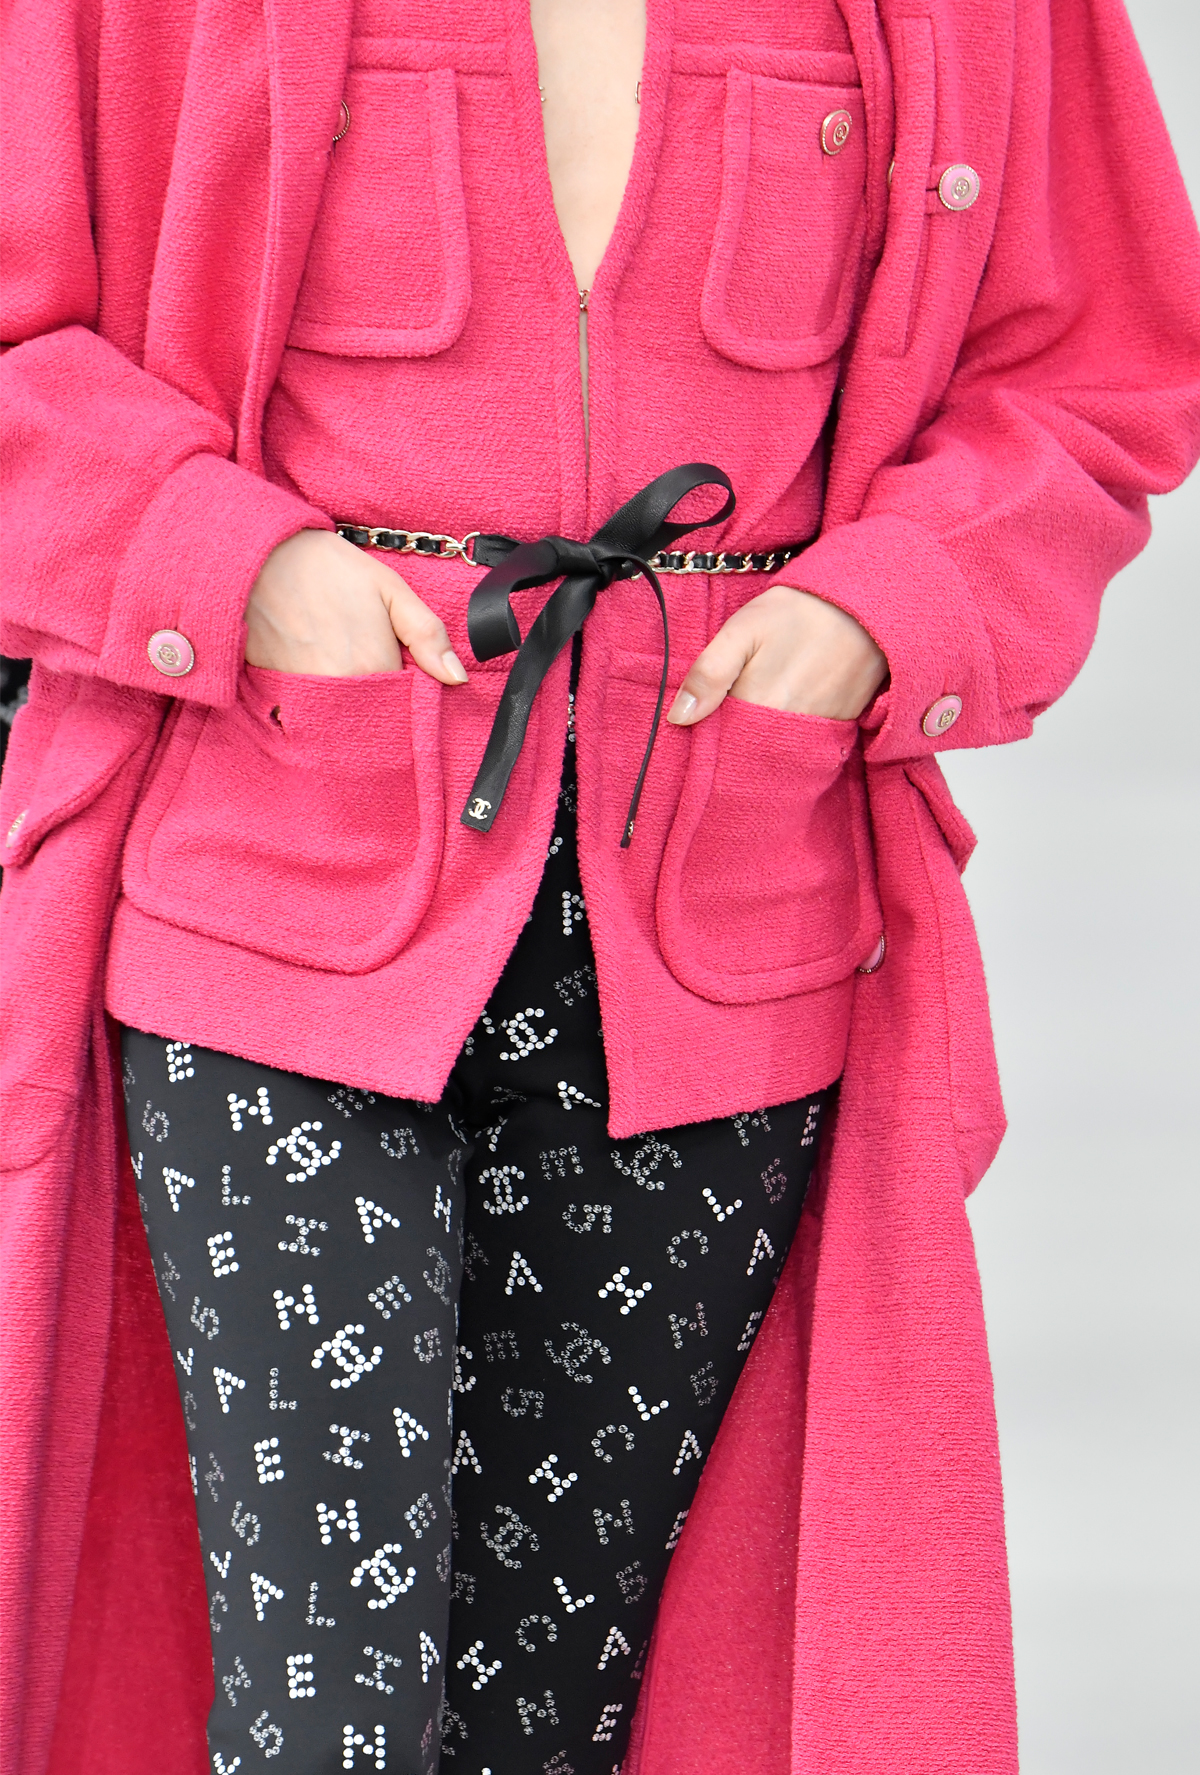 Chanel Logo print leggings: